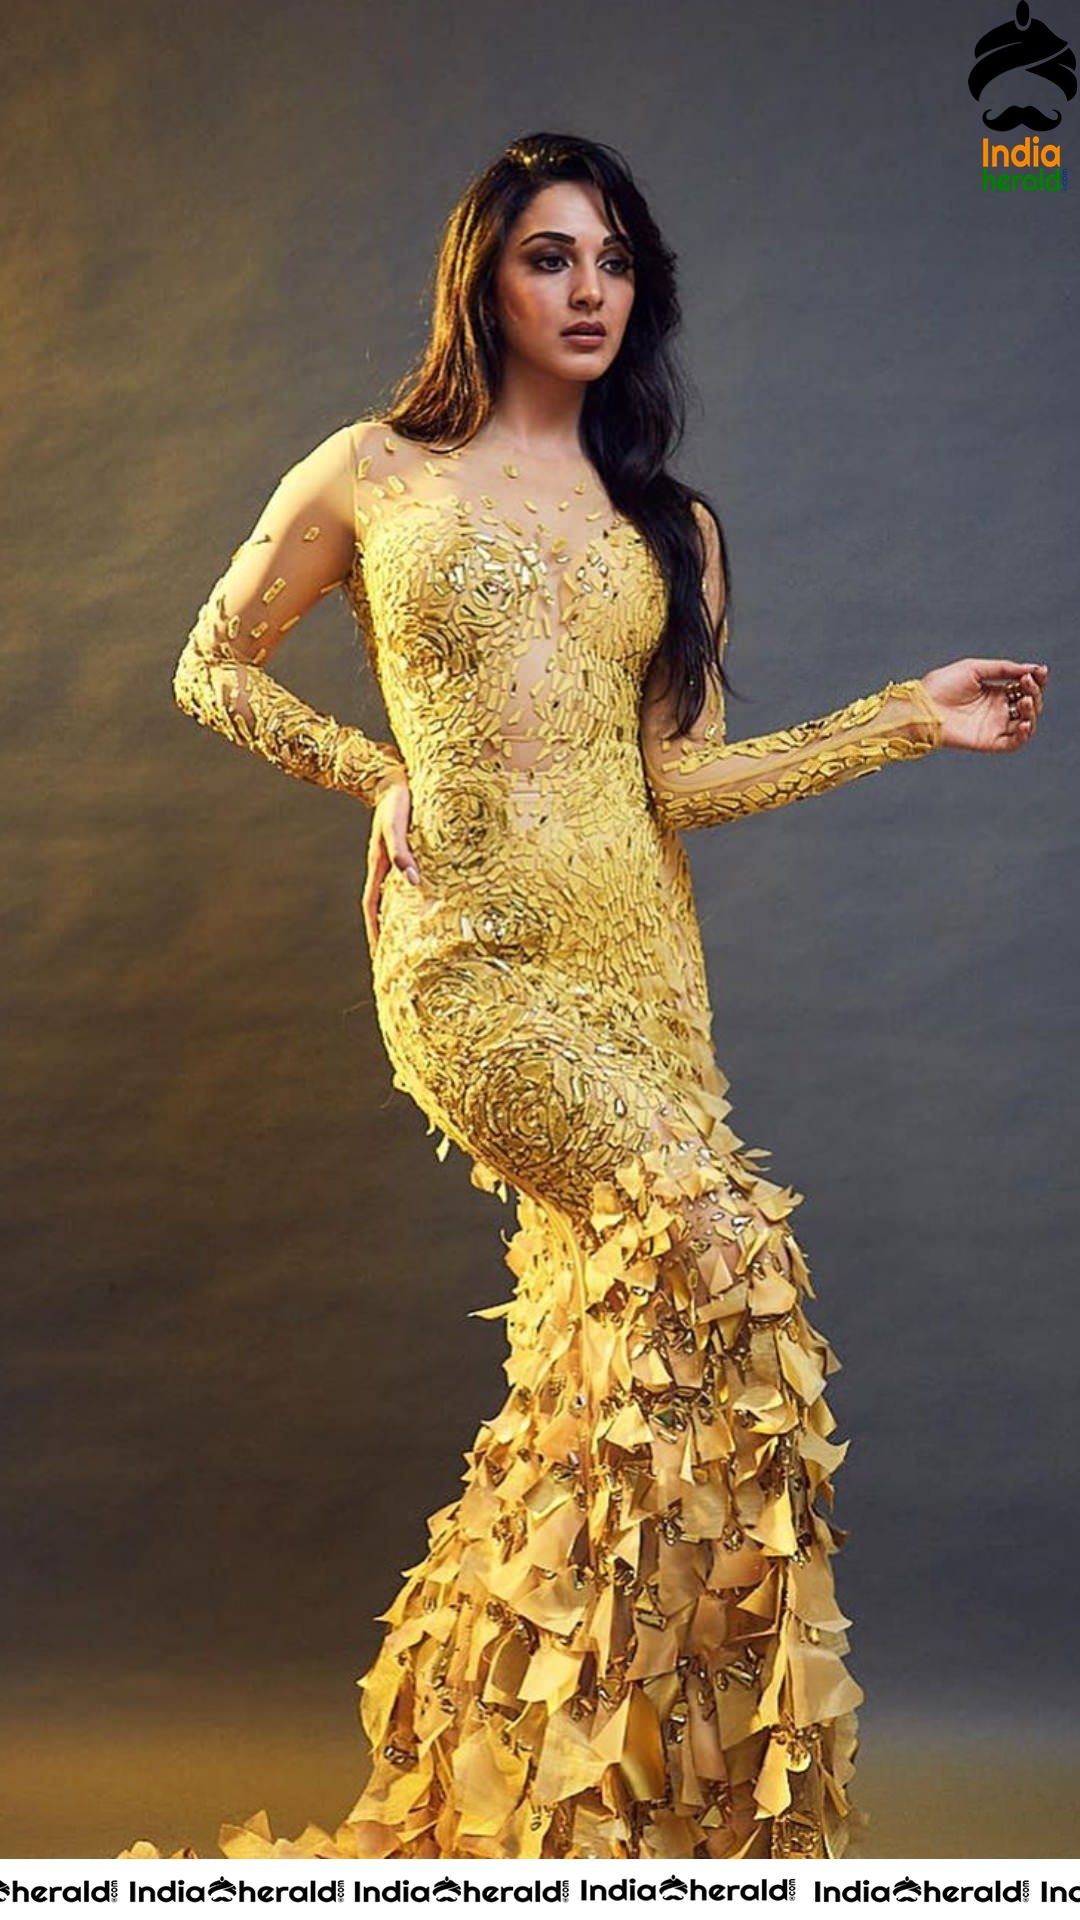 Kiara Advani Looks like a Golden Angel in this Photoshoot